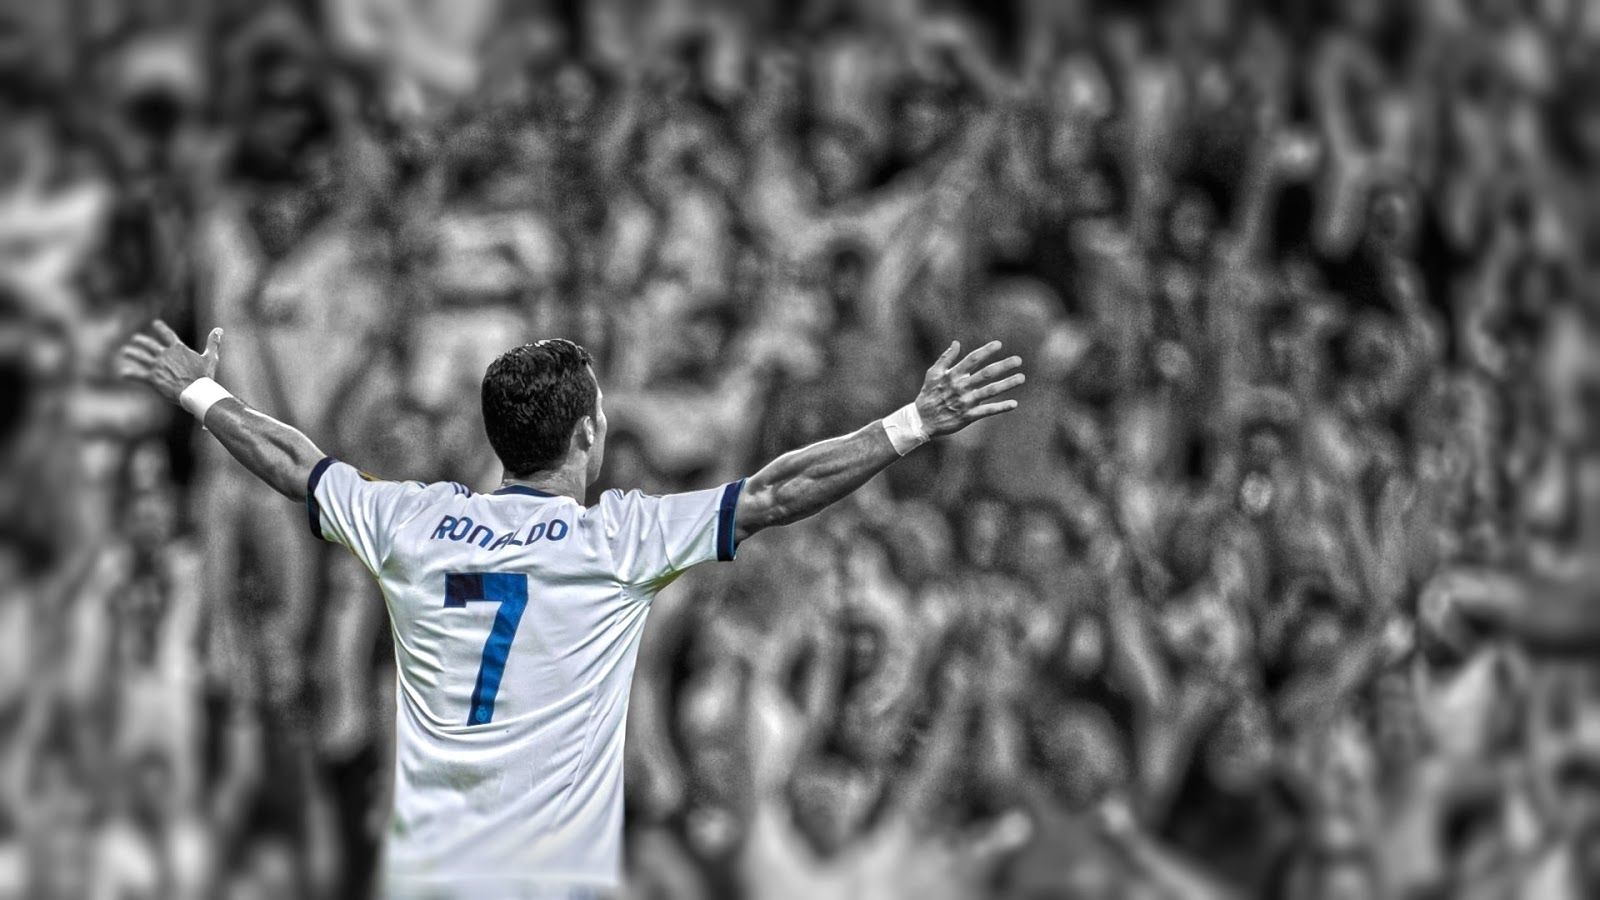 Cristiano Ronaldo HD Wallpaper,Images,Pics - HD Wallpapers Blog